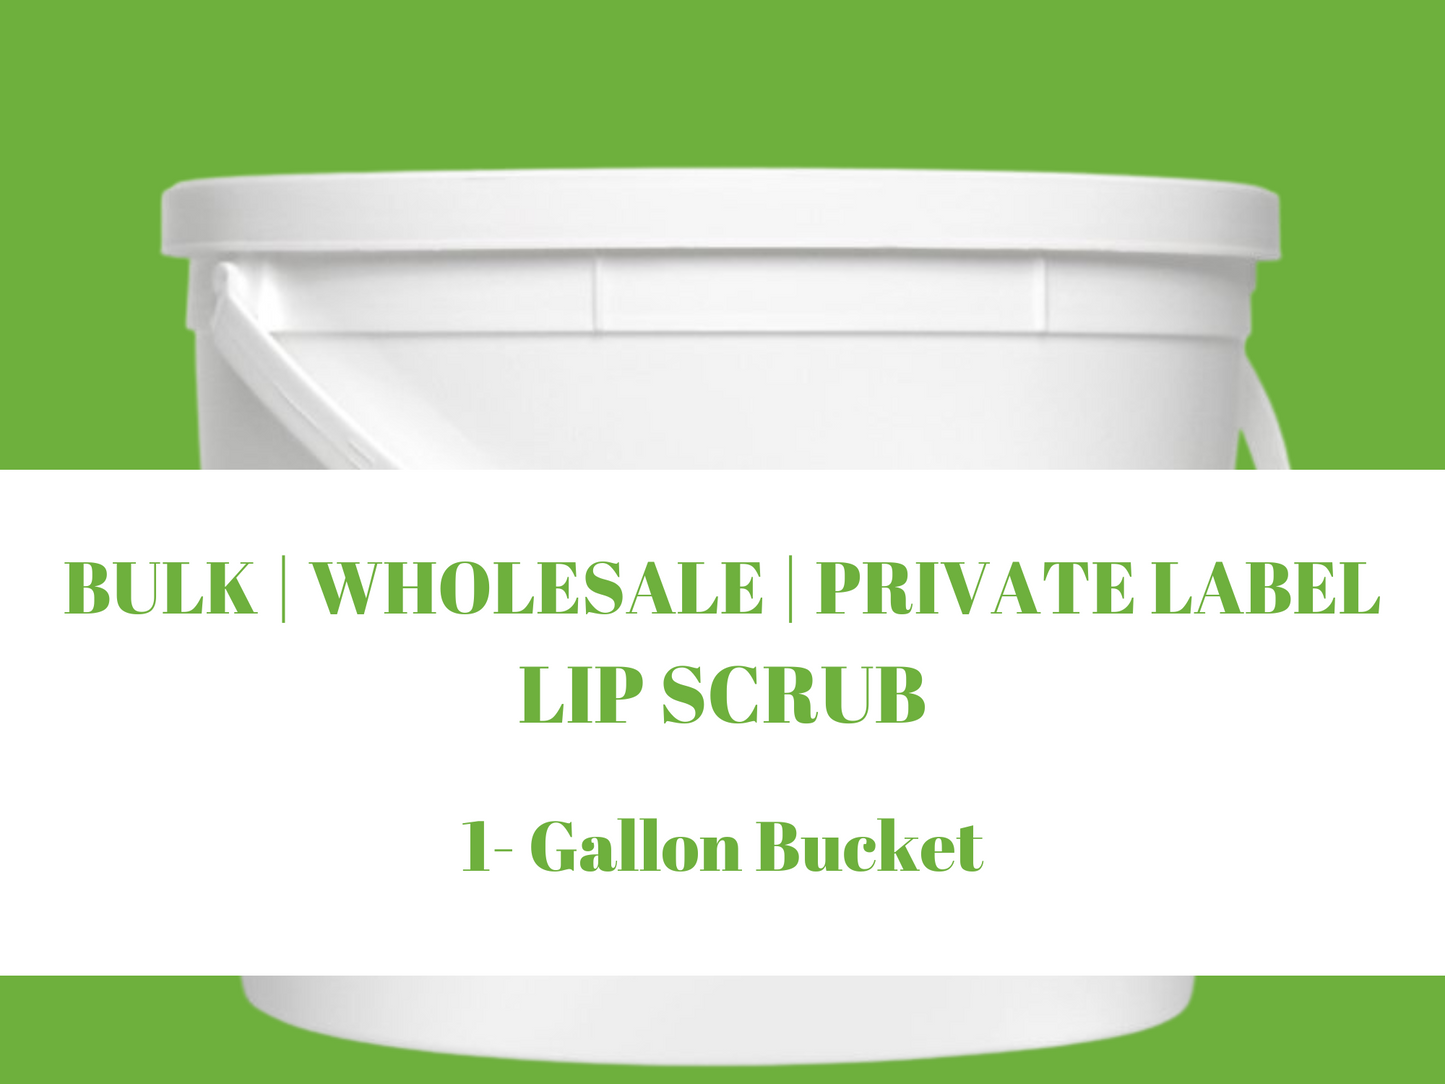 Bulk | Wholesale Lip Scrub -1 Gallon Bucket